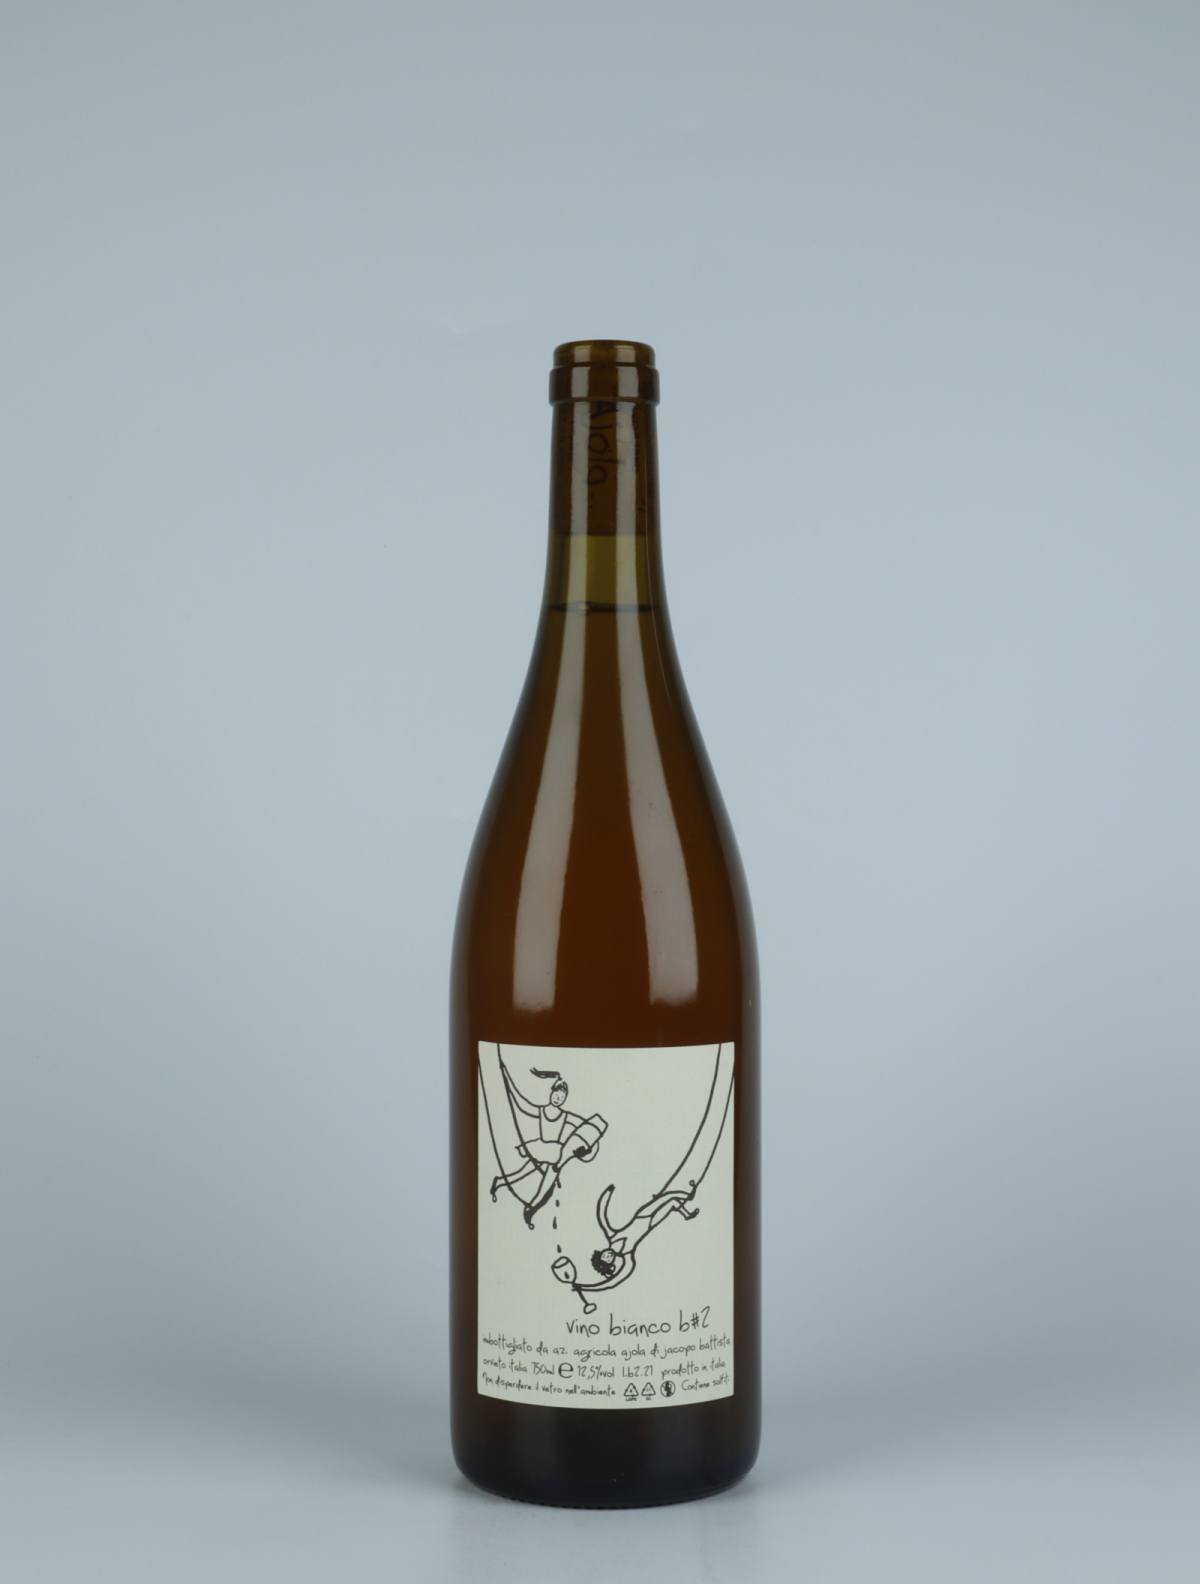 A bottle 2021 Vino Bianco #2 Orange wine from Ajola, Umbria in Italy